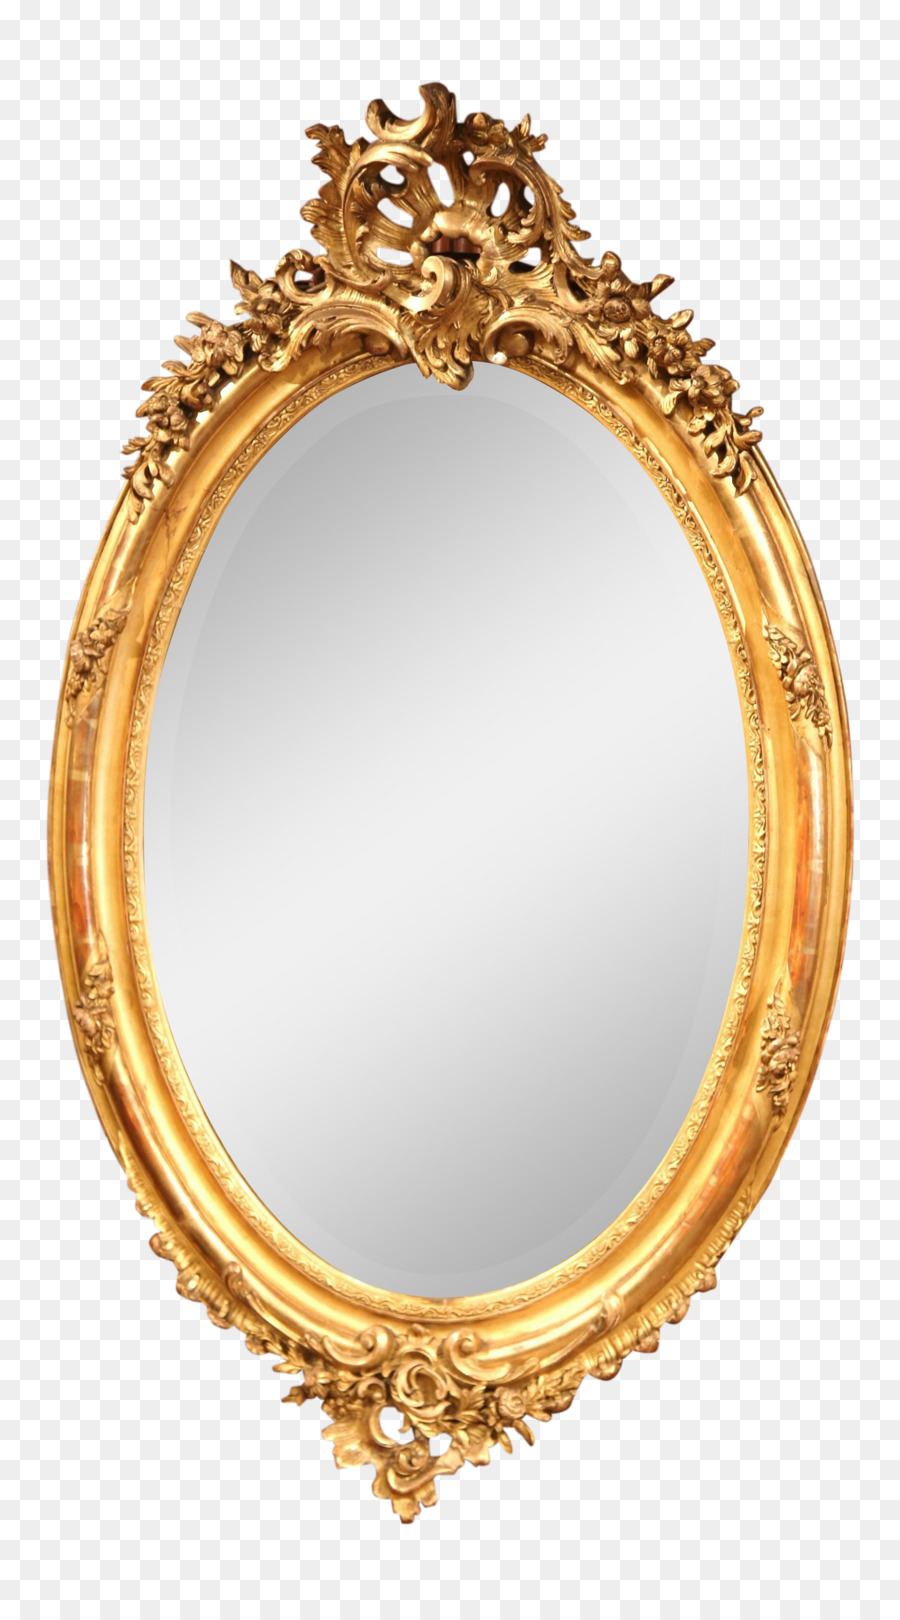 Background Gold Frame Png Download 1882 3358 Free Transparent Mirror Png Download Cleanpng Kisspng